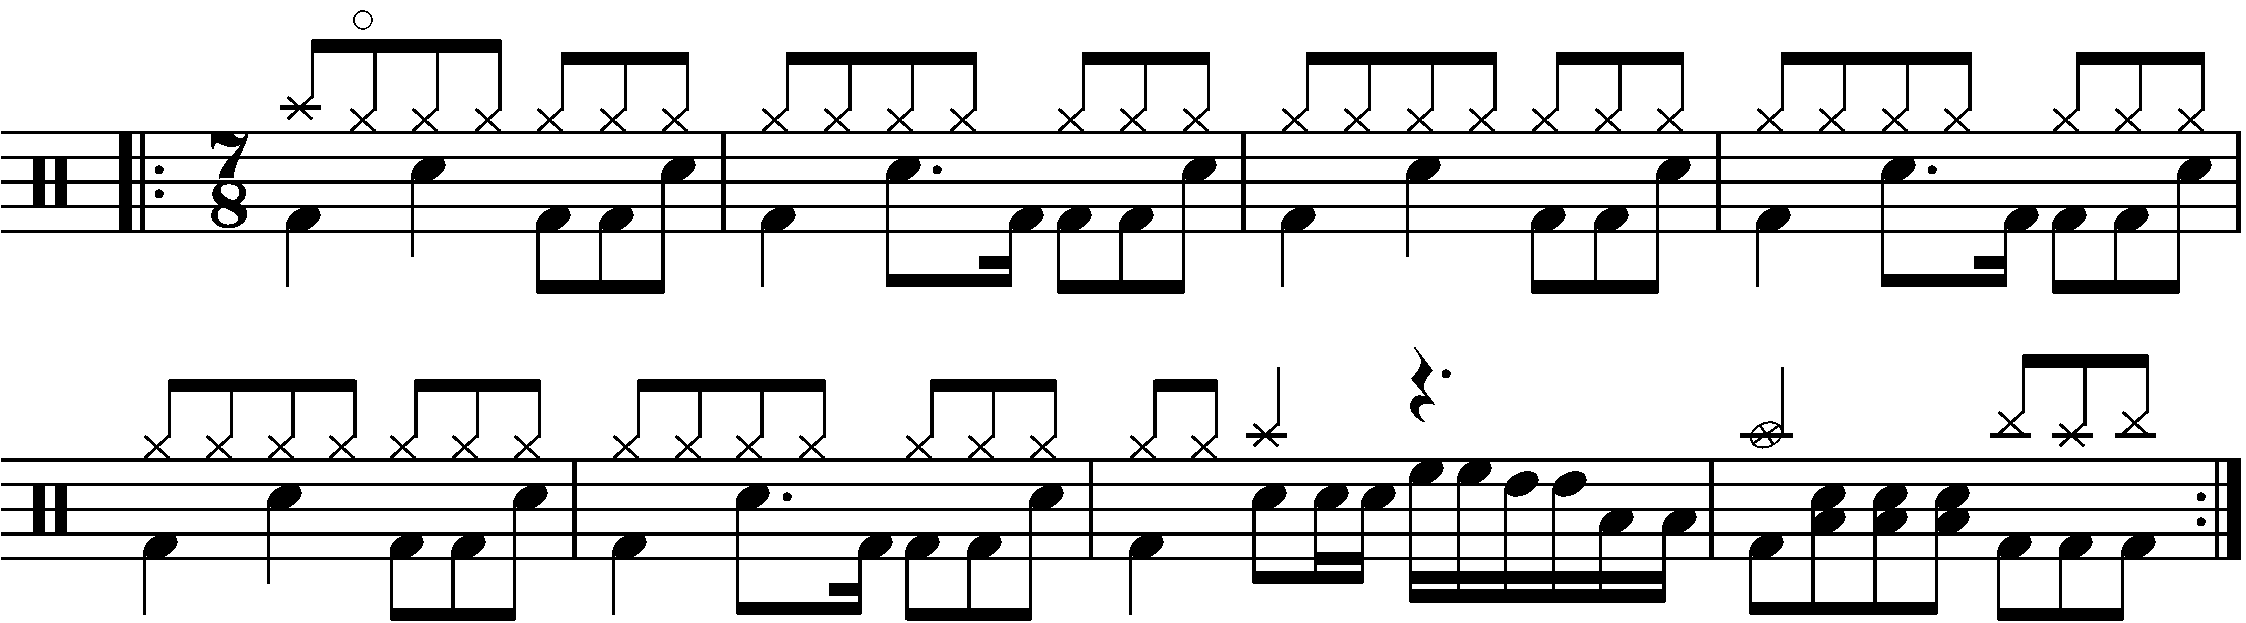 An eight bar phrase built of an AAAB pattern using 2 bar 7/8 grooves